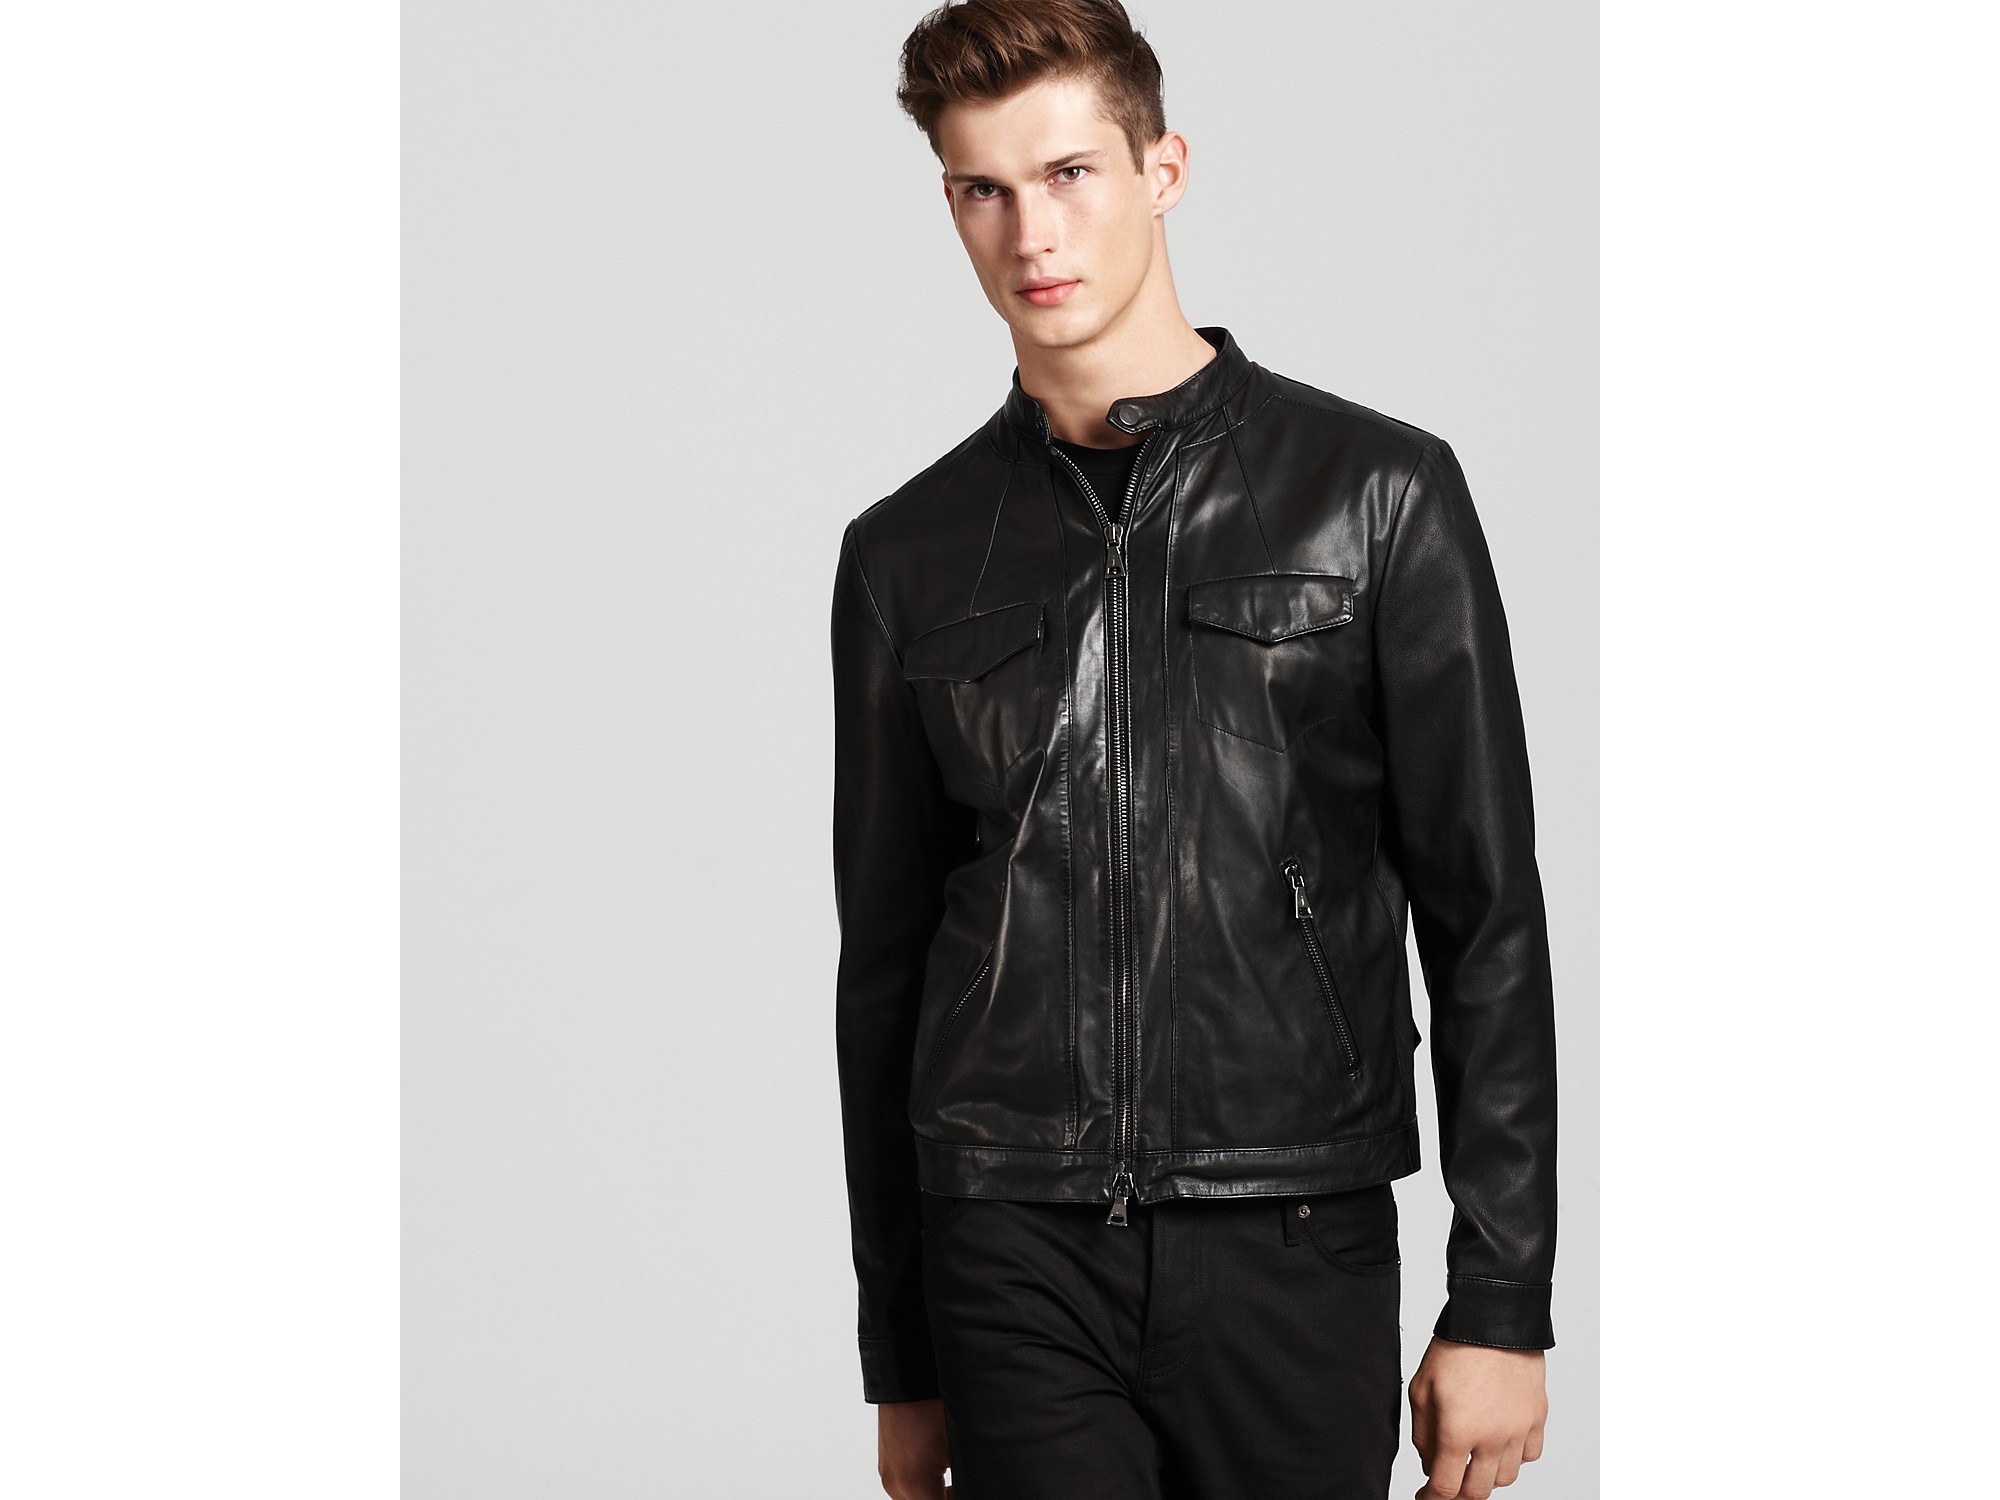 Lyst - John Varvatos Zip Front Leather Jacket in Black for Men